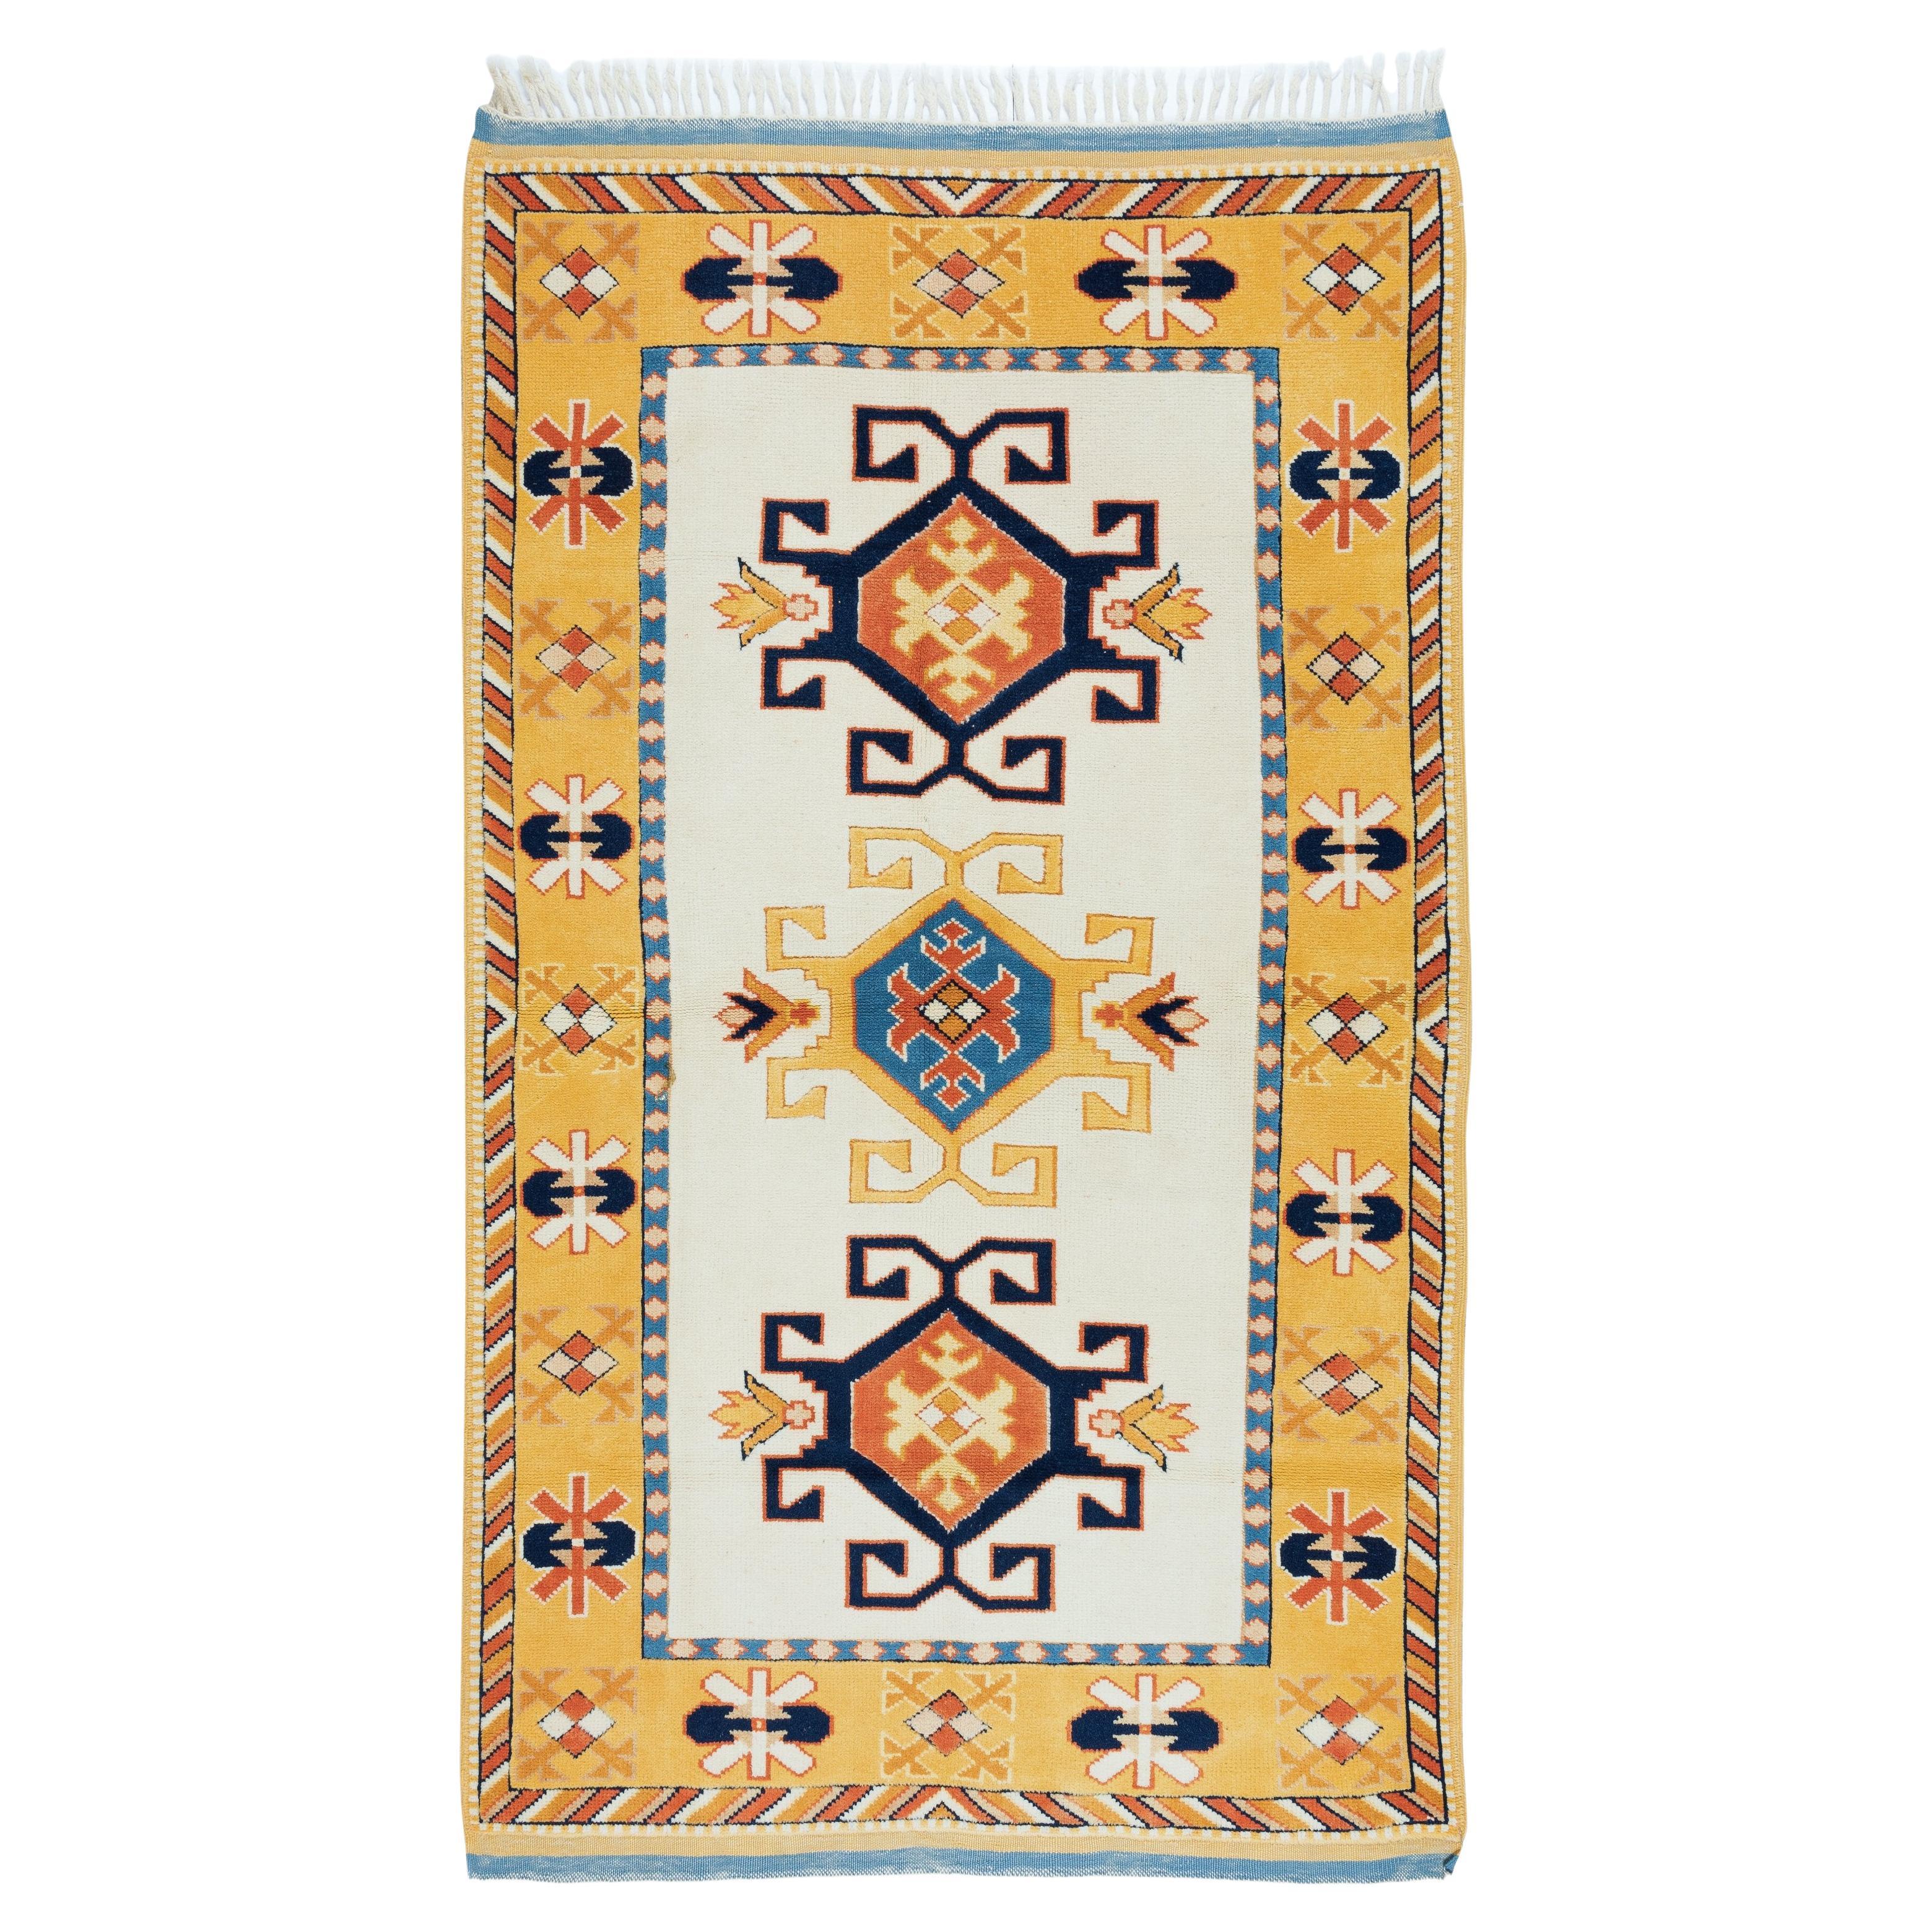 4x6 Ft Modern Handmade Turkish Wool Rug with Geometric Design, 100% Wool For Sale